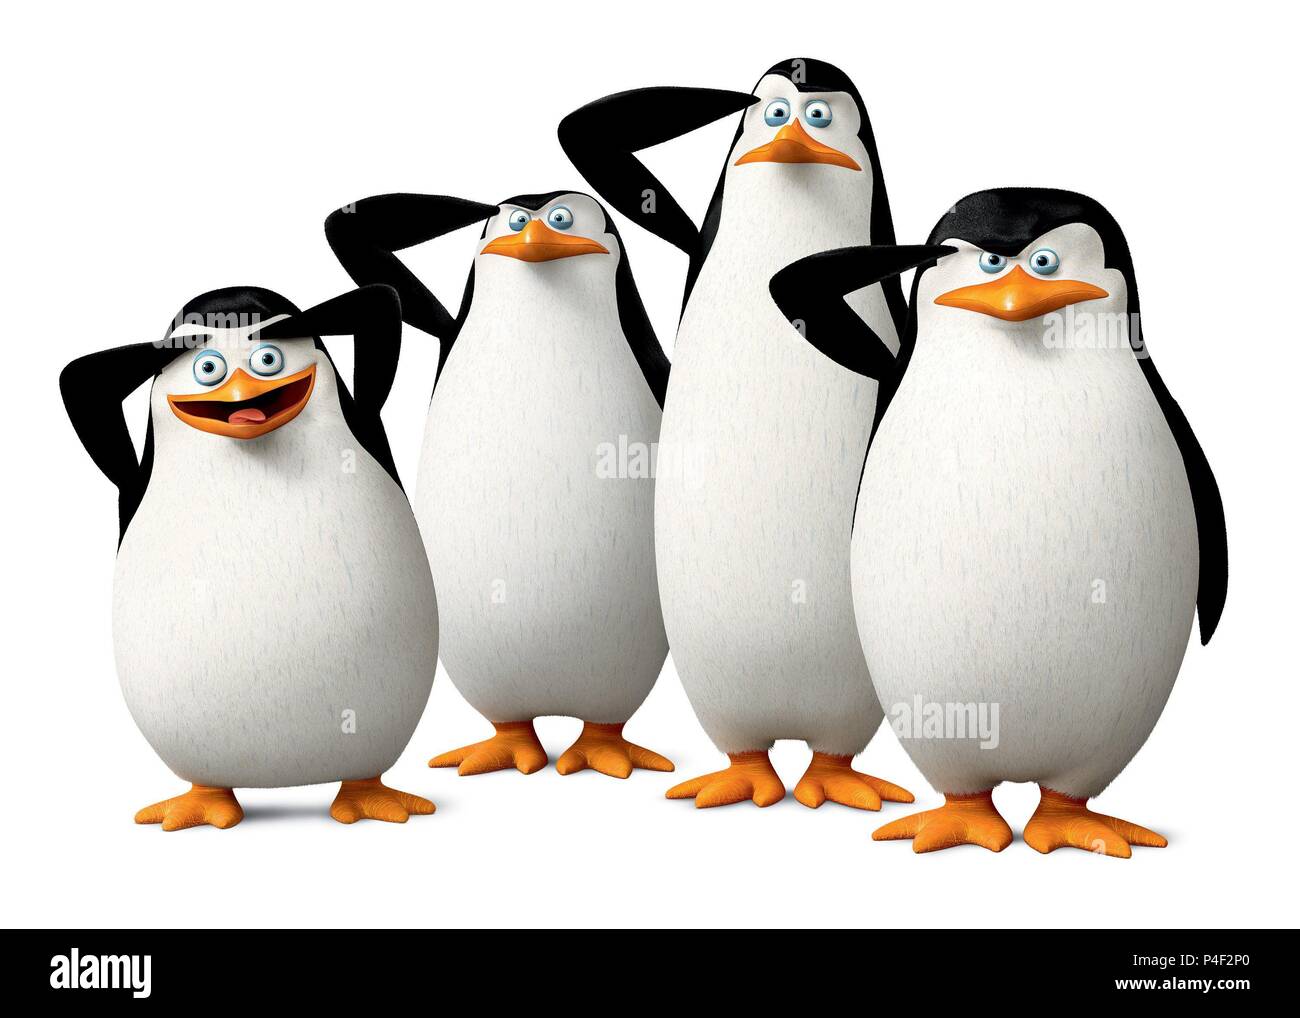 Original Film Titel: pinguine von Madagaskar. Englischer Titel: pinguine  von Madagaskar. Regisseur: Eric DARNELL; SIMON J. SMITH. Jahr: 2014.  Quelle: DREAMWORKS ANIMATION/Album Stockfotografie - Alamy